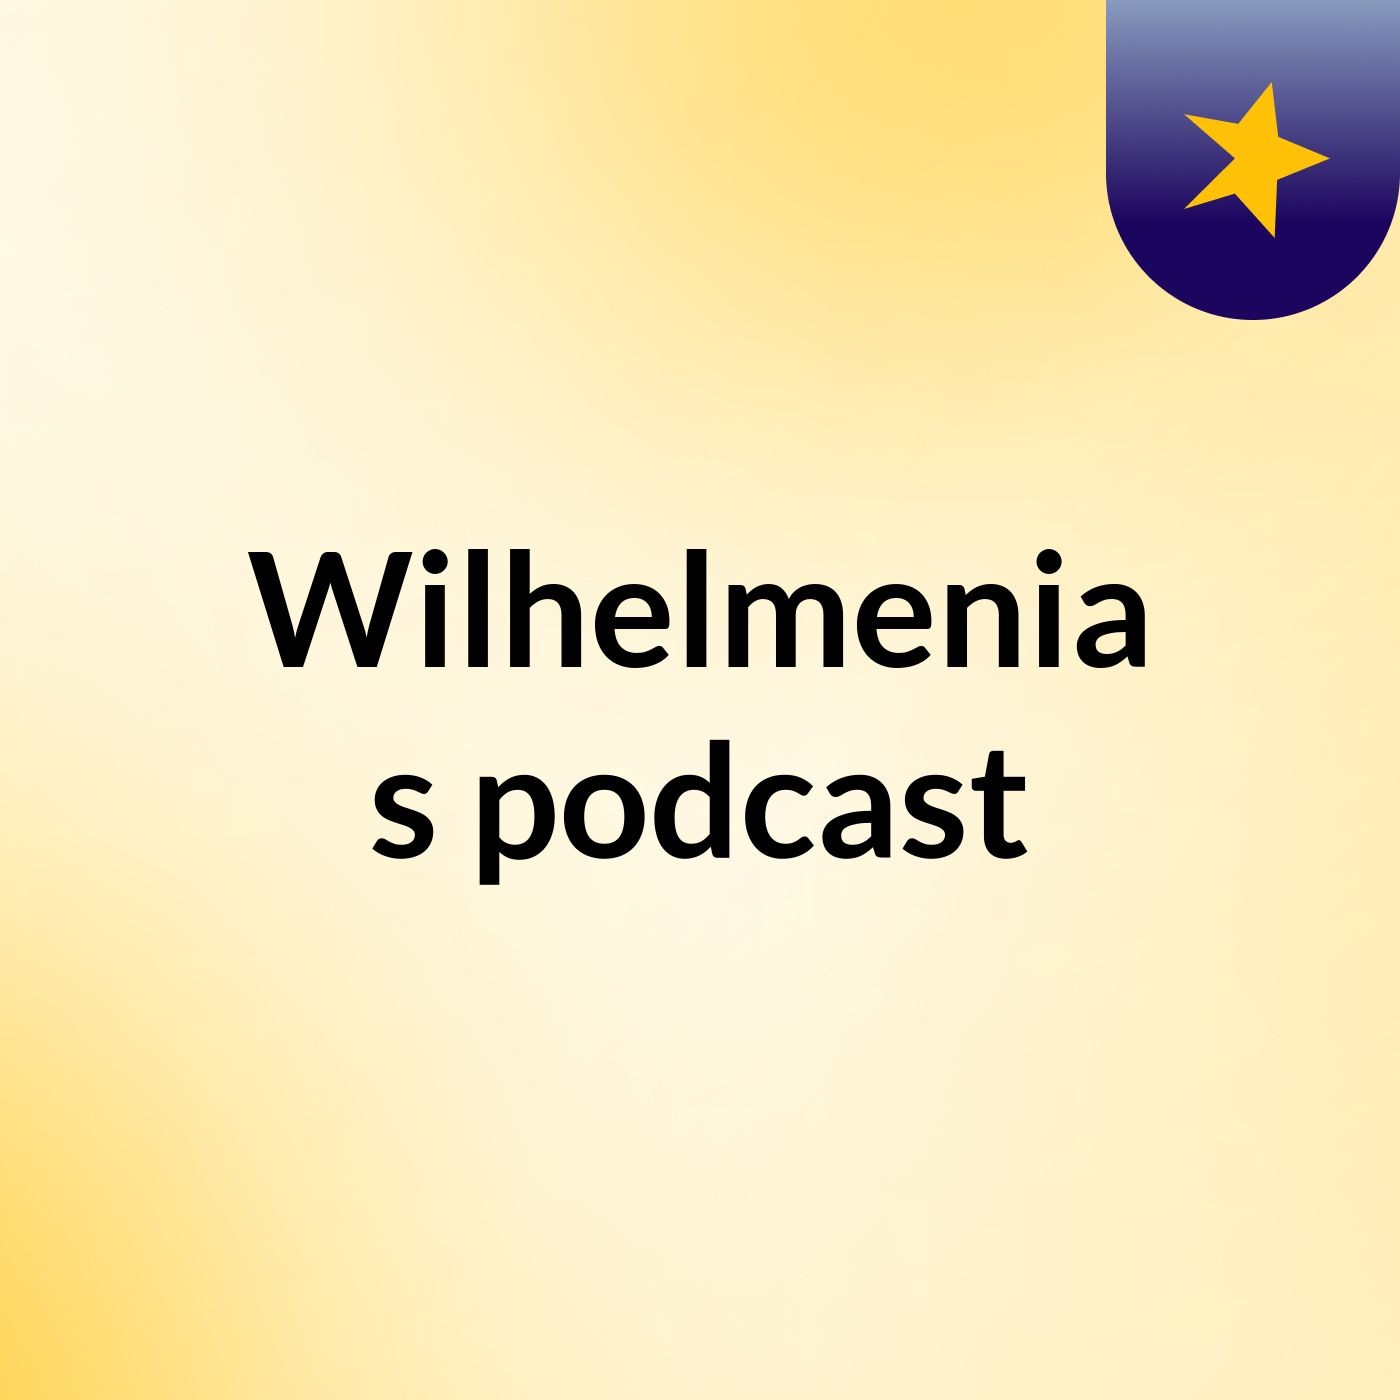 Episode 4 - Wilhelmenia's podcast